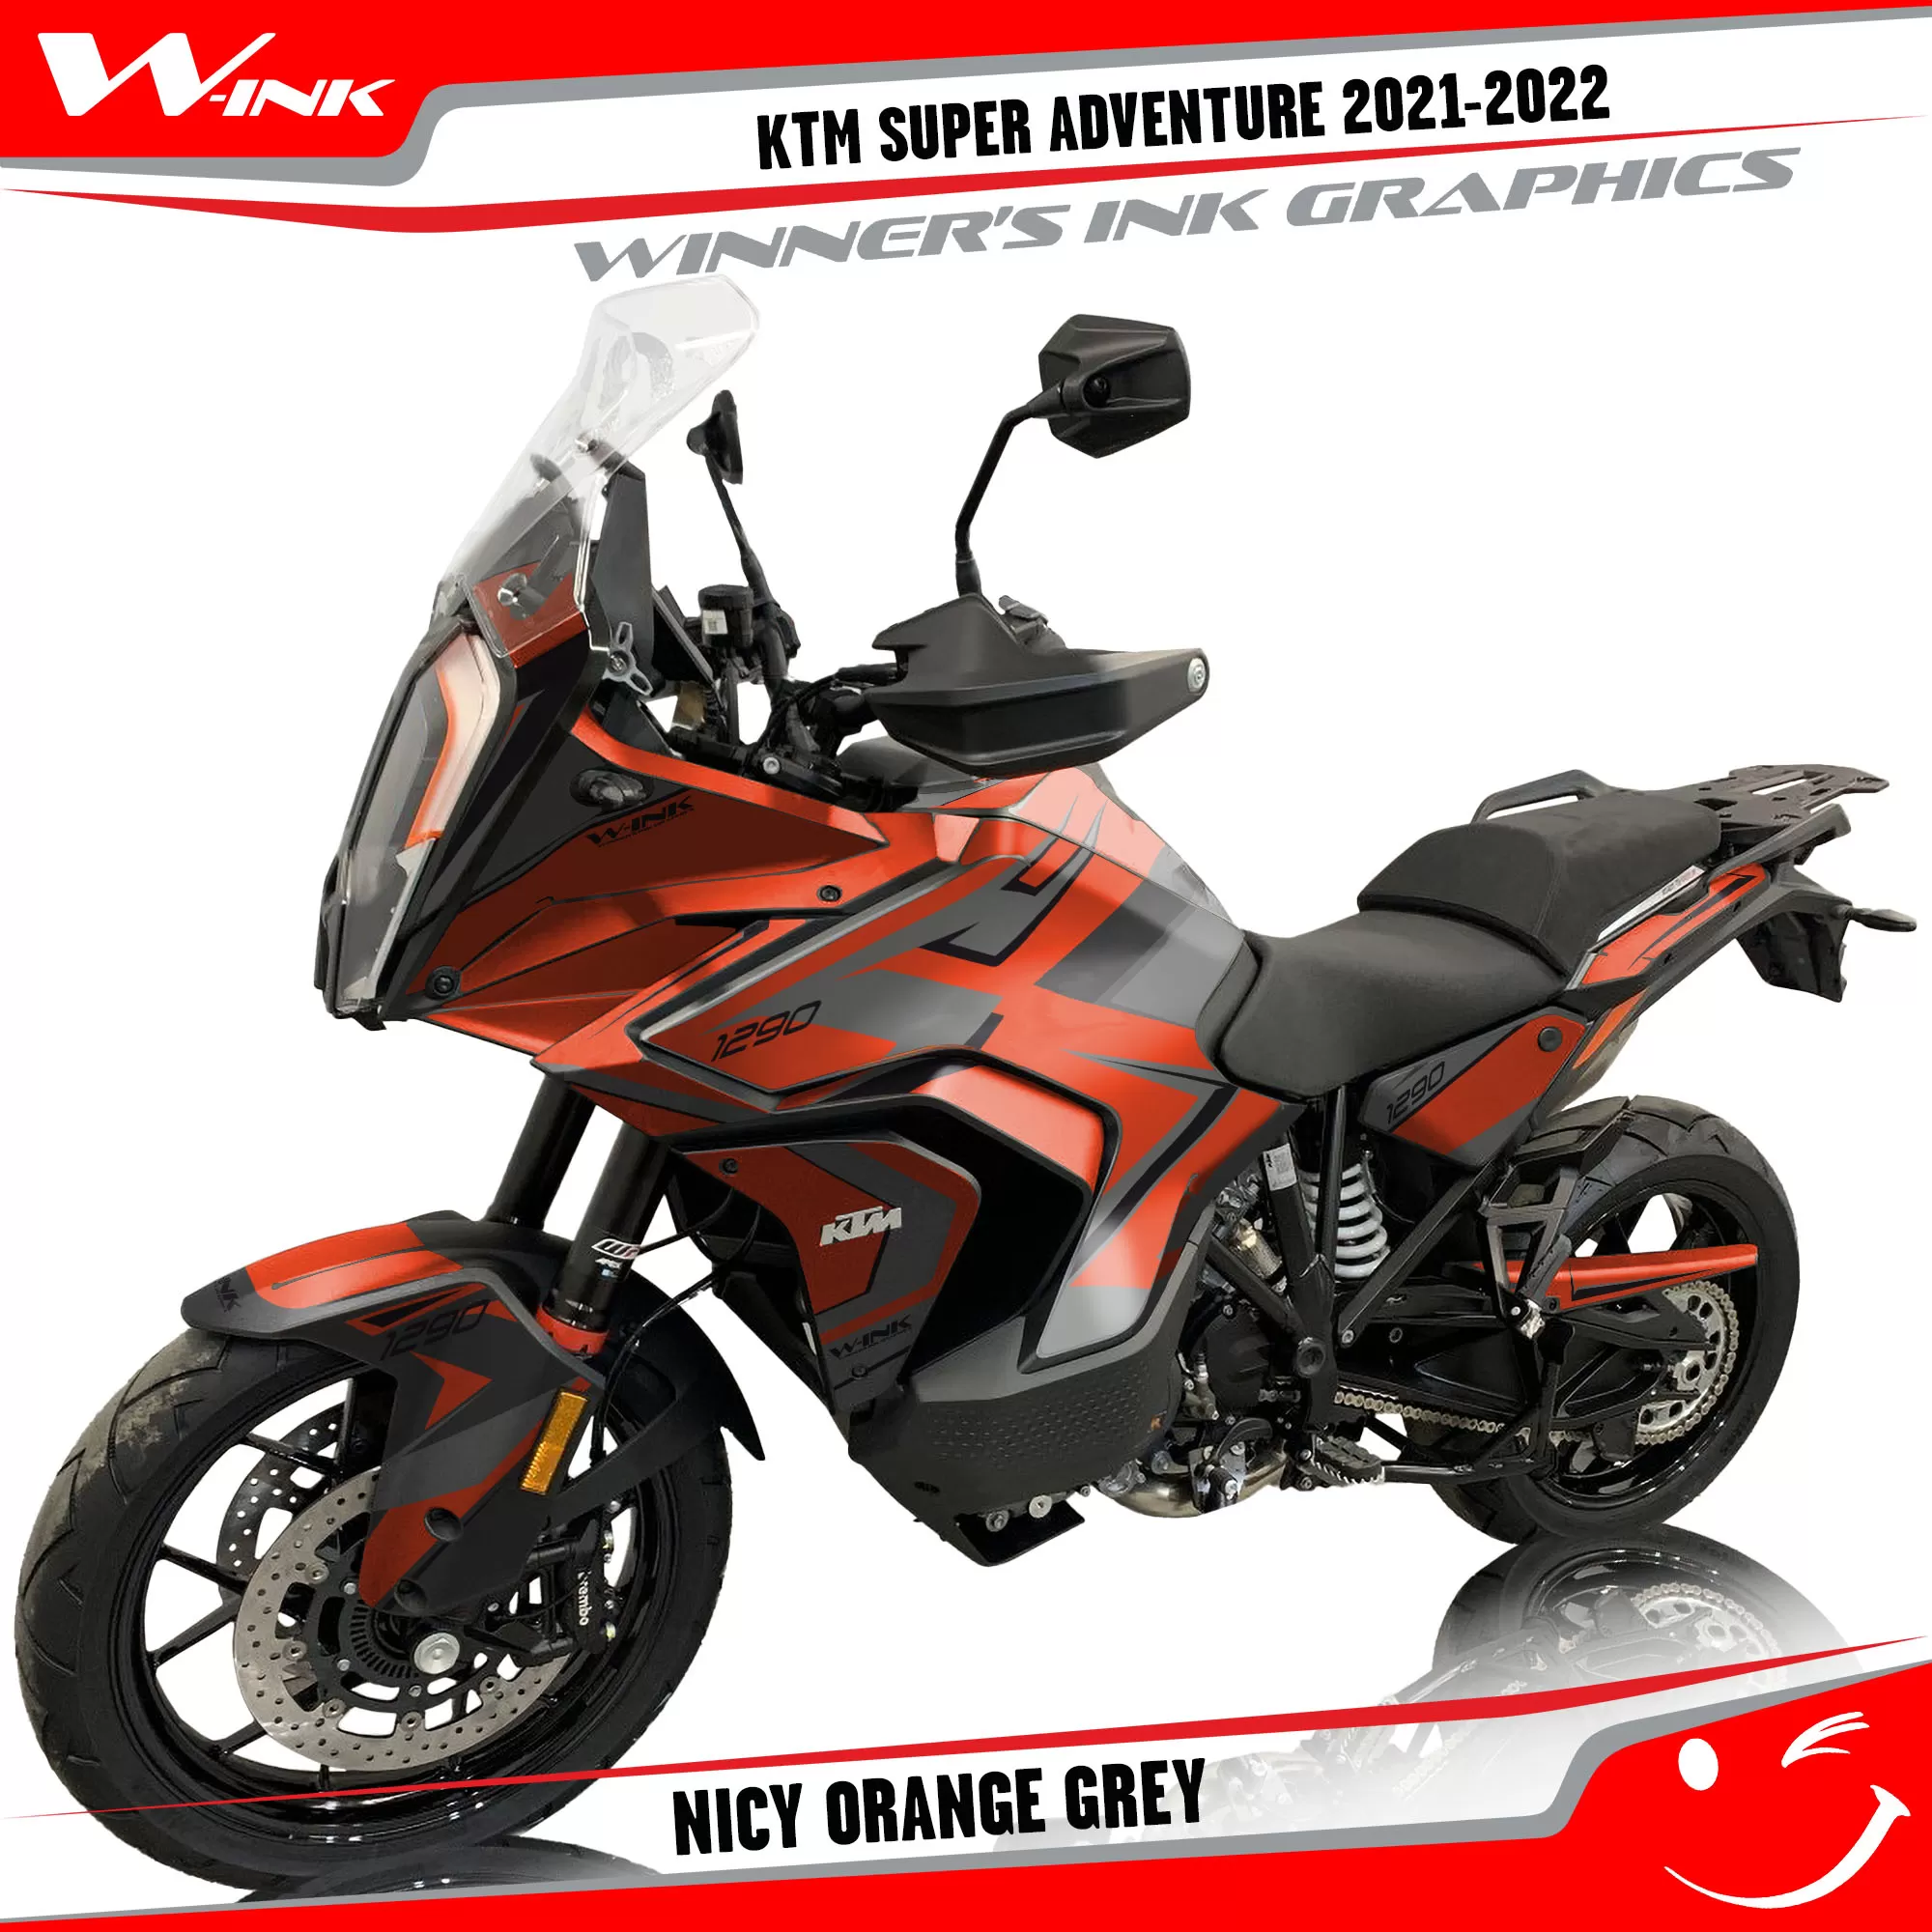 KTM-Super-Adventure-S-2021-2022-graphics-kit-and-decals-with-designs-Nicy-Orange-Grey